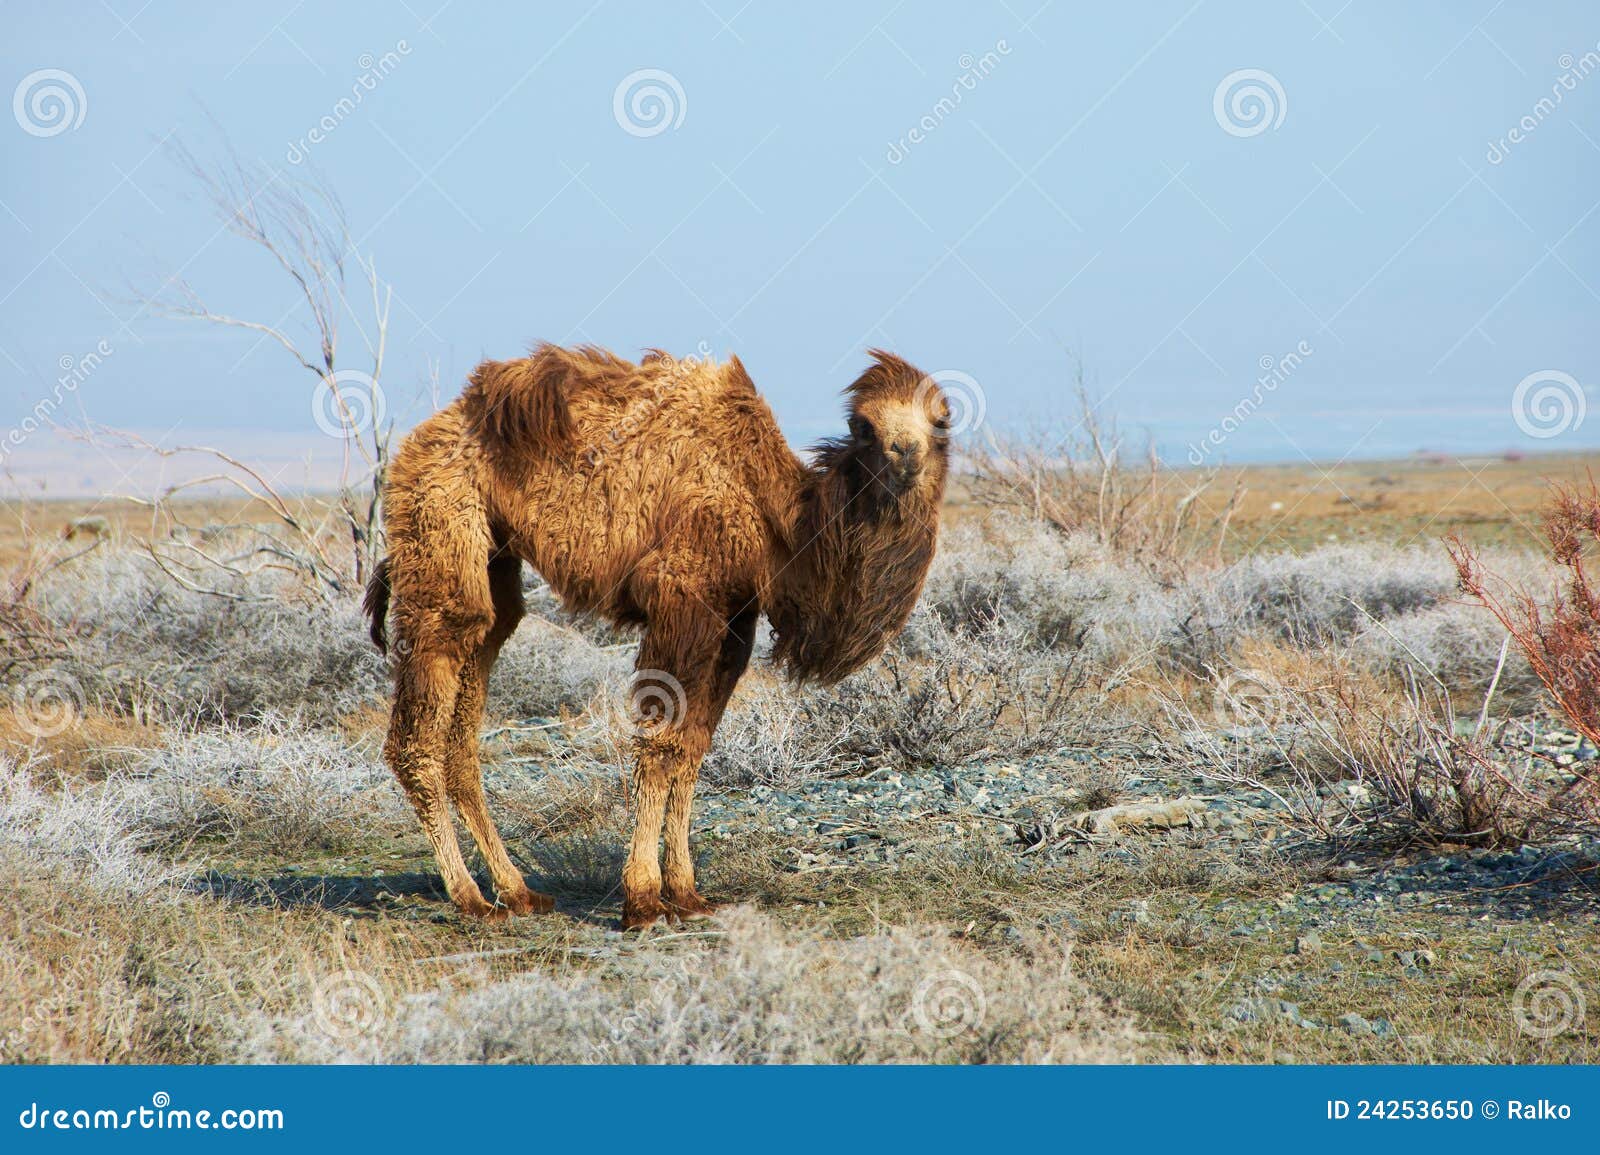 Small Camel Stock Photo - Image: 24253650